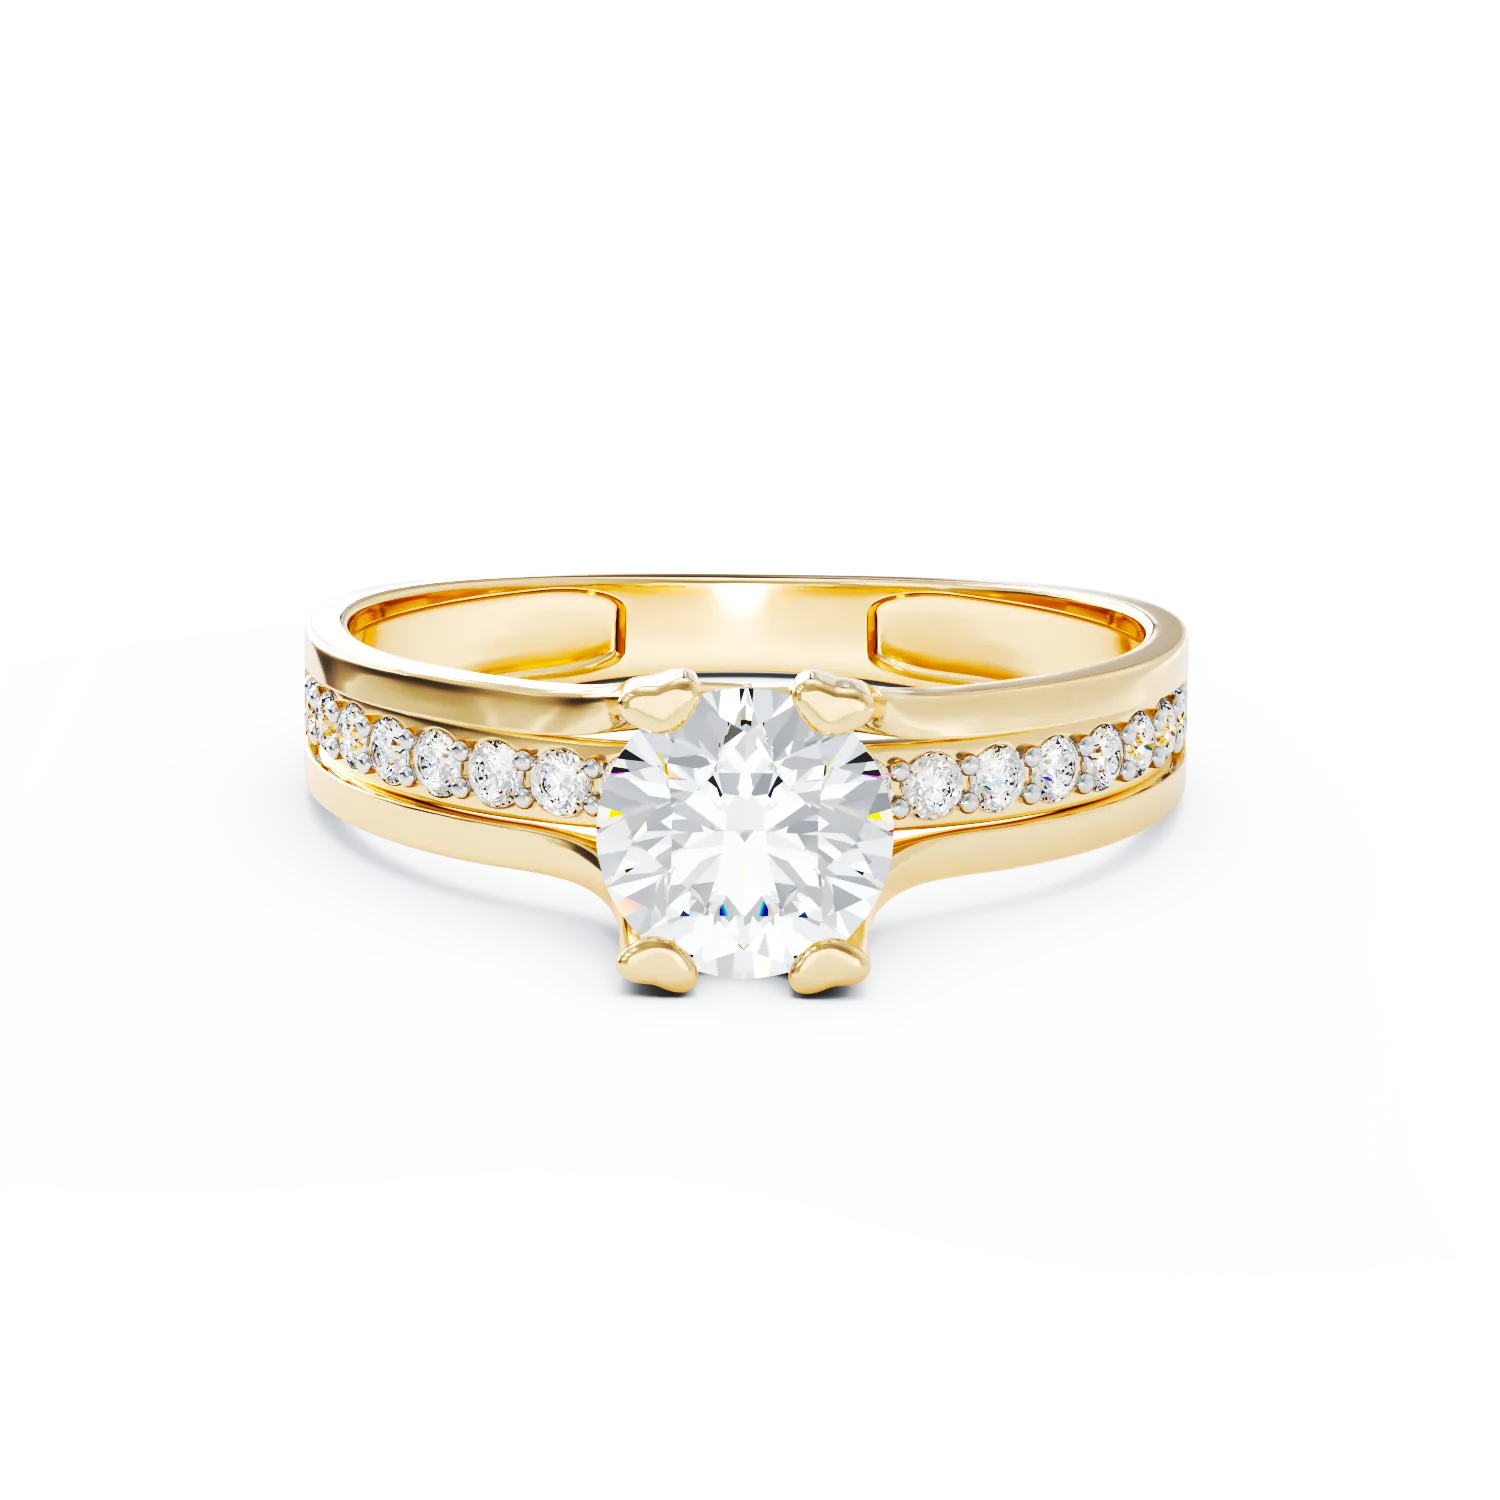 14K yellow gold engagement ring